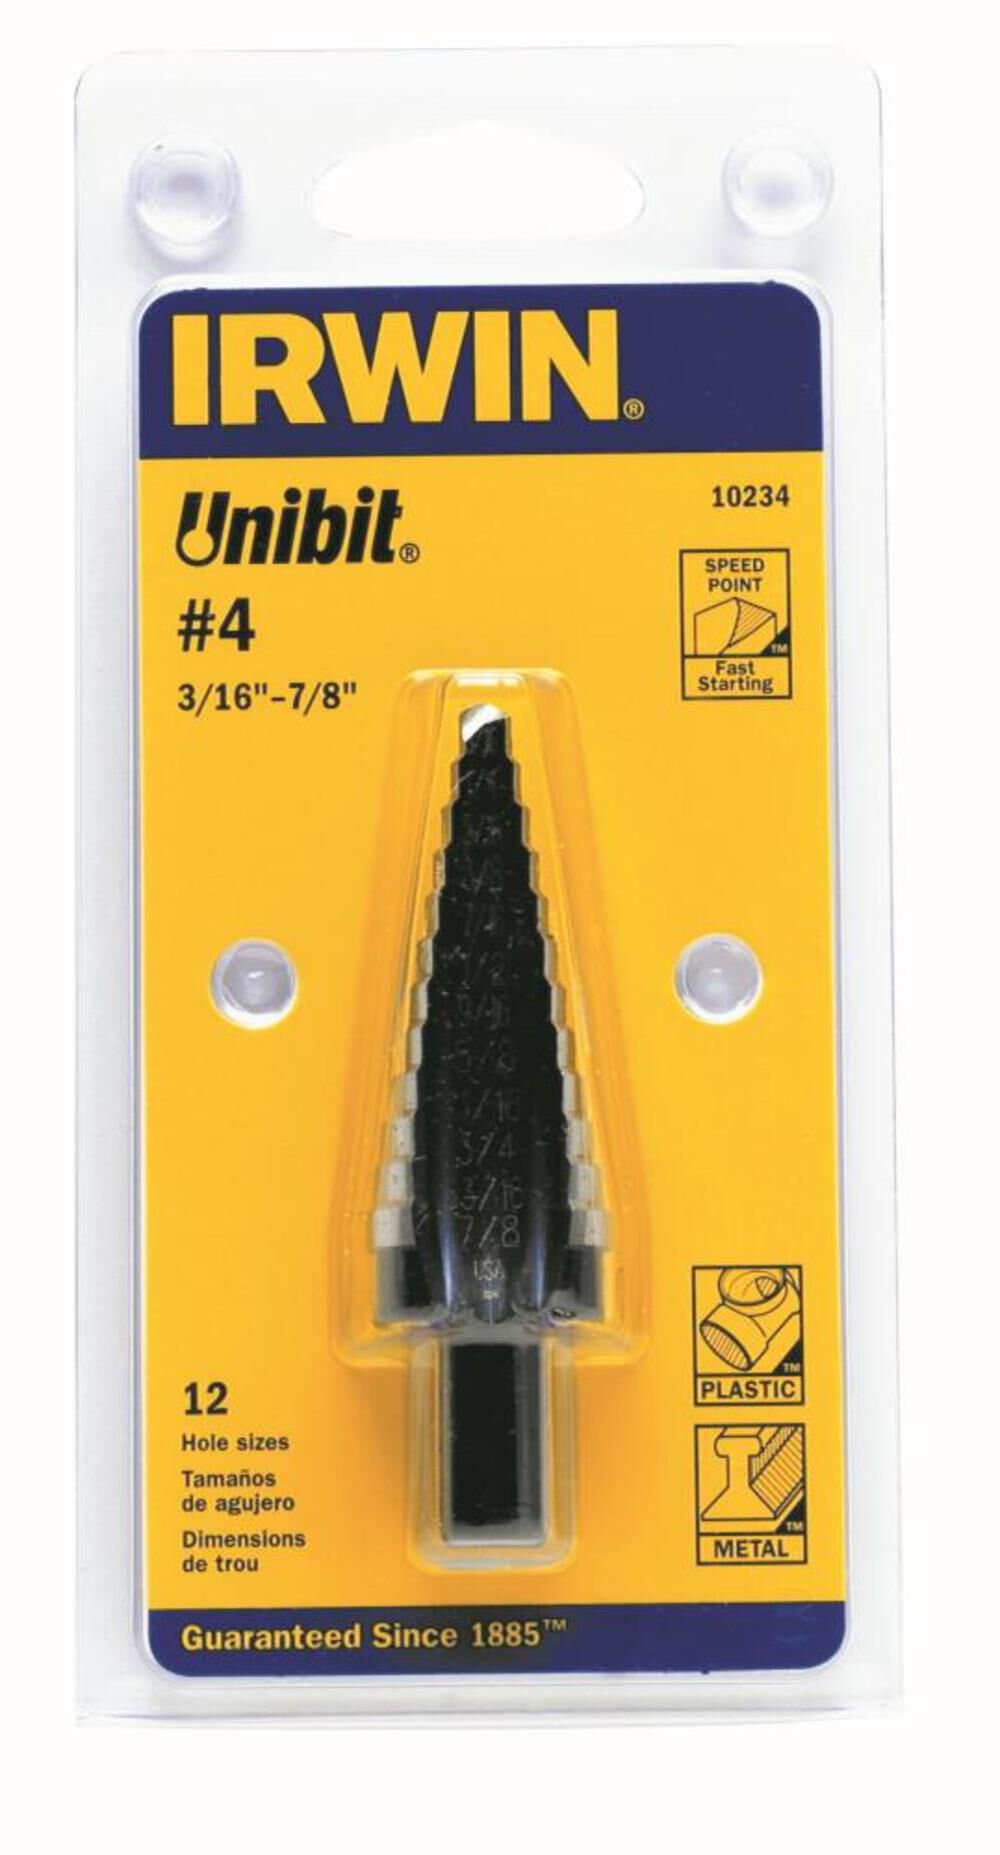 #4 Unibit Step Drill Bit 3/16 In. to 7/8 In. 12 Sizes 10234